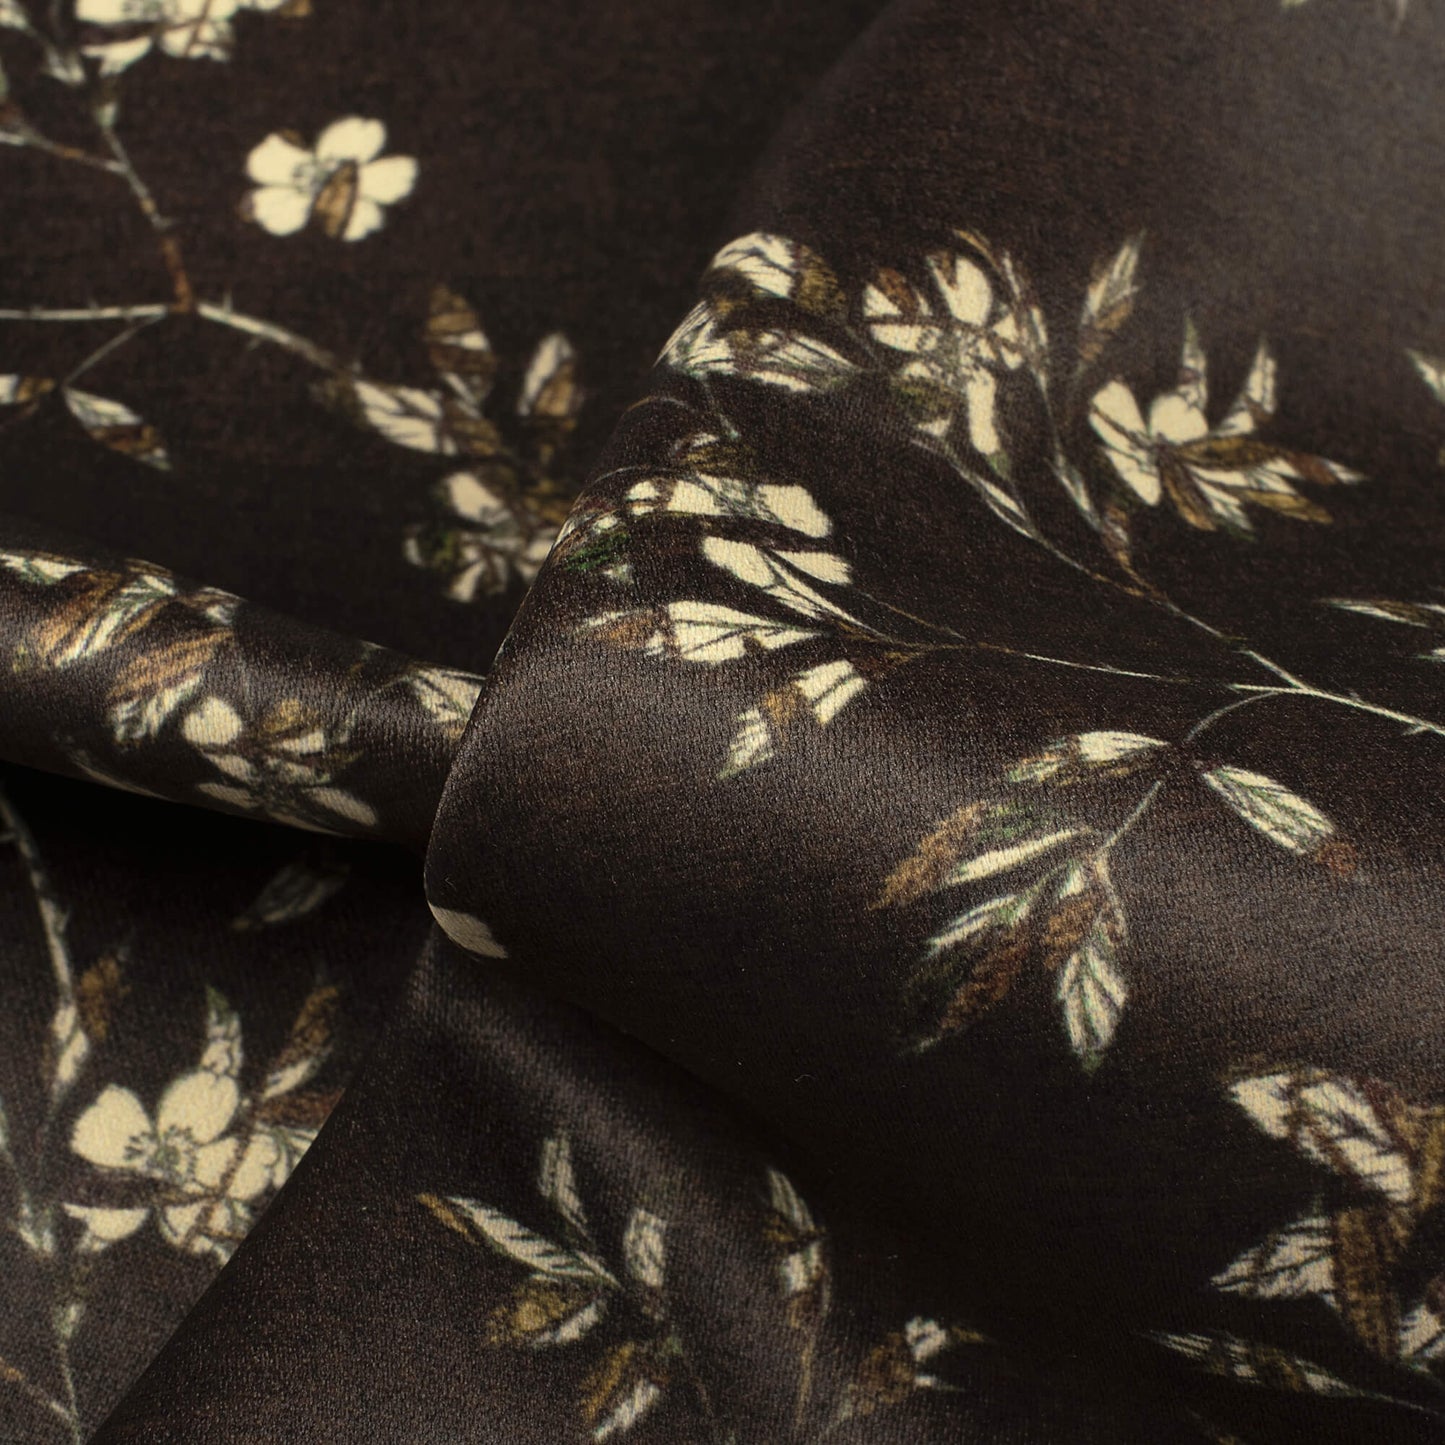 Dark Brown And Beige Leaf Printed Exclusive Shirting Fabric